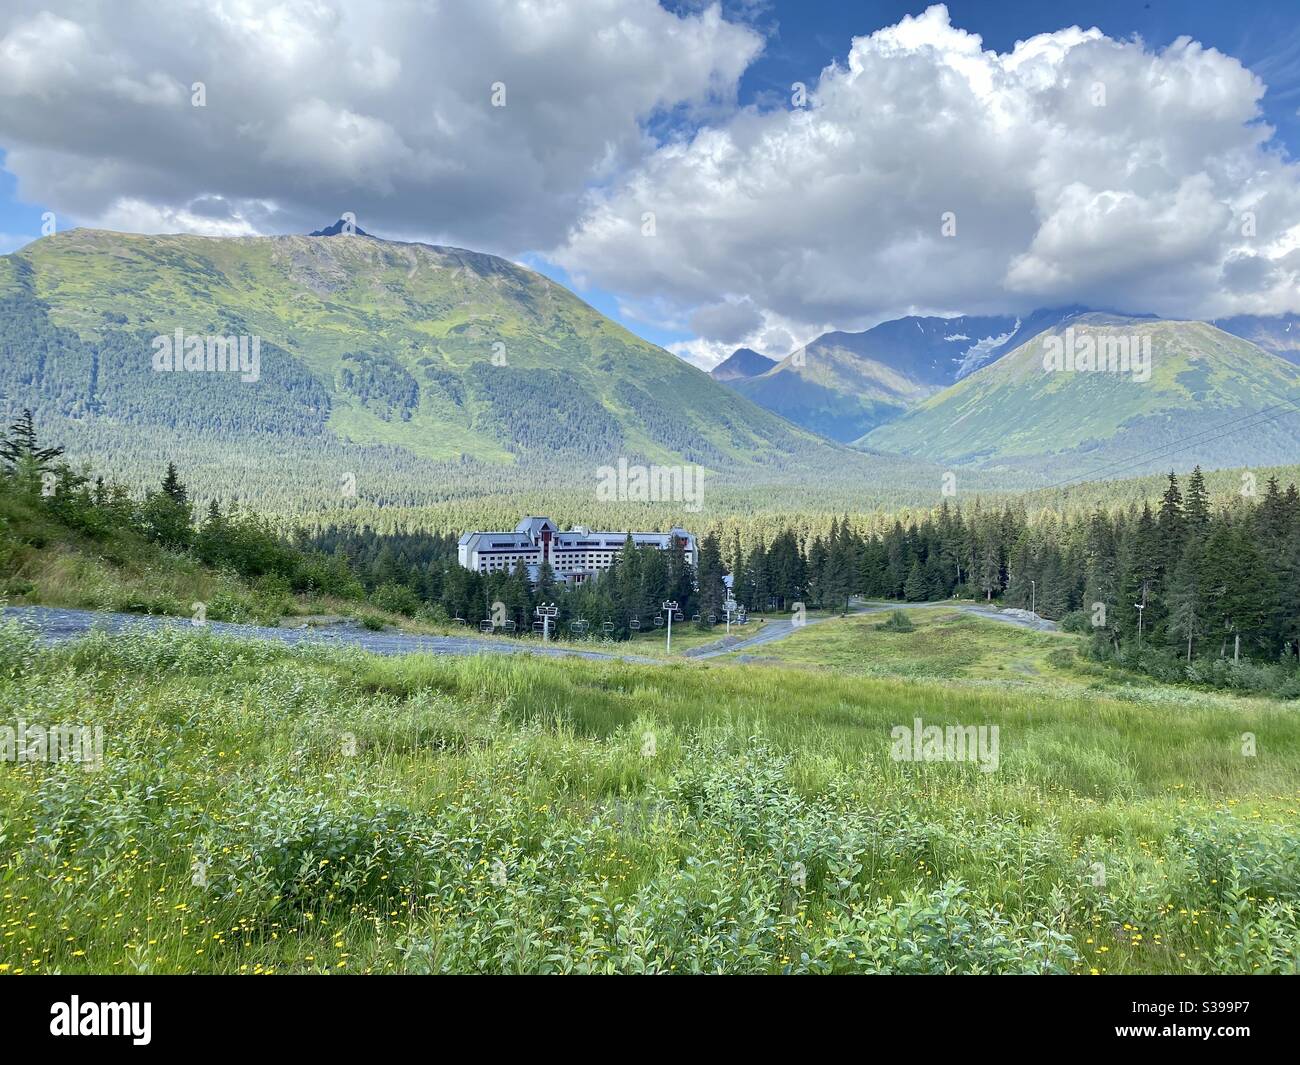 View of Alyeska Resort in Girdwood, Alaska from one of the slopes. Stock Photo